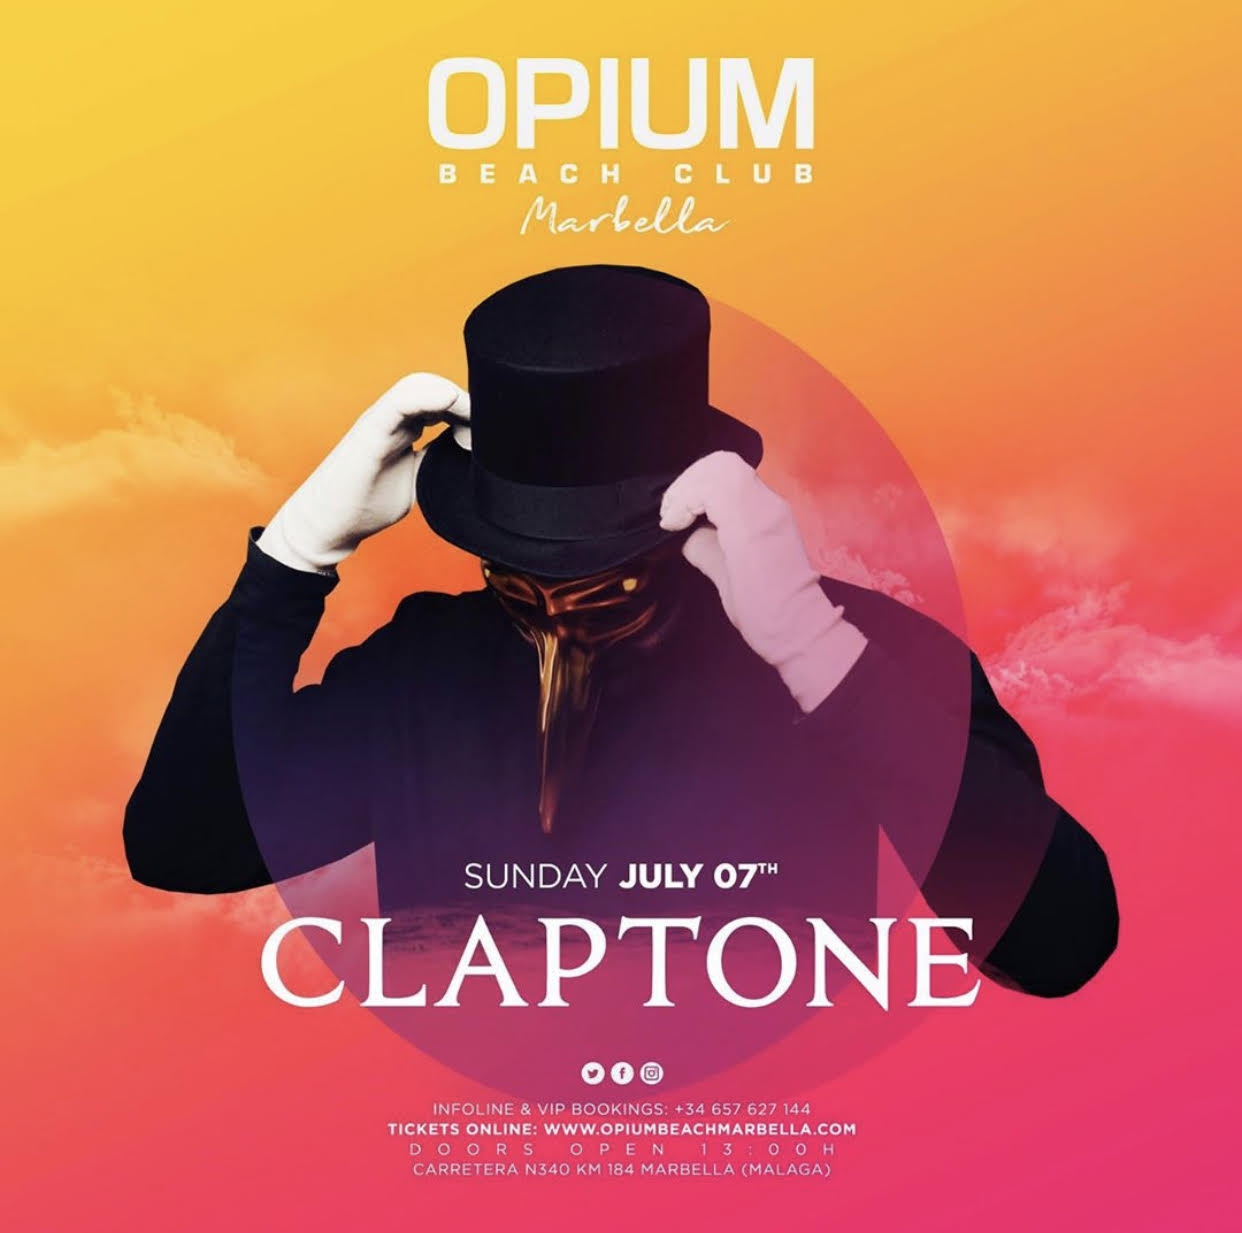 Claptone at Opium Beach Cllub